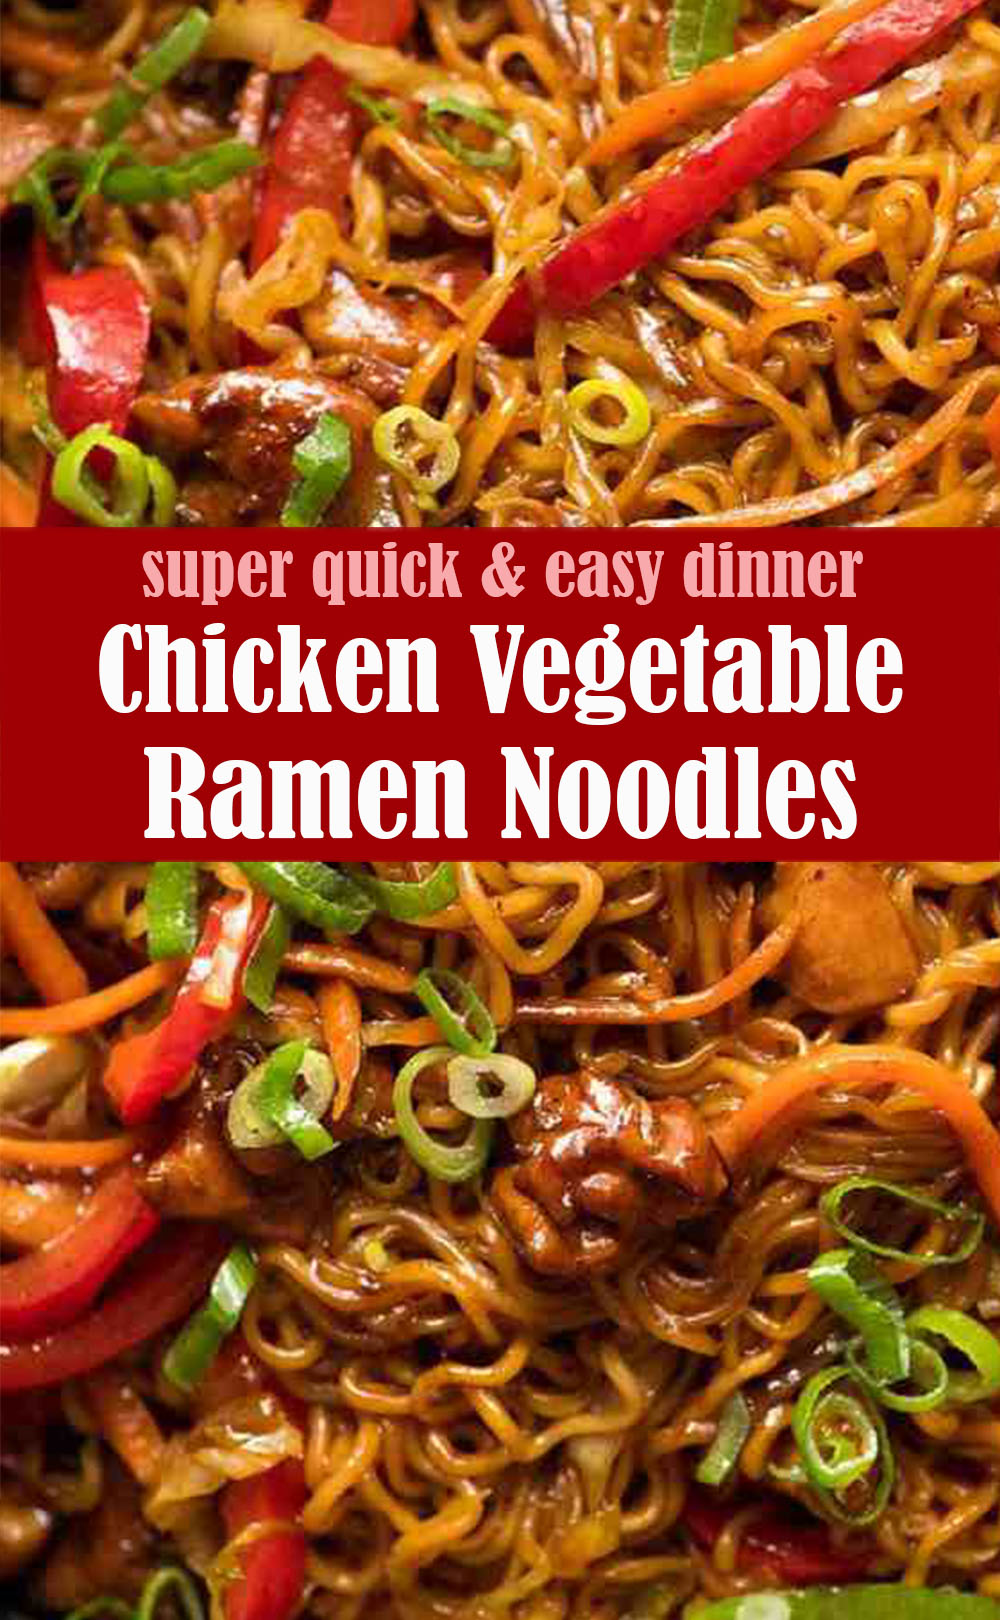 Chicken Vegetable Ramen Noodles